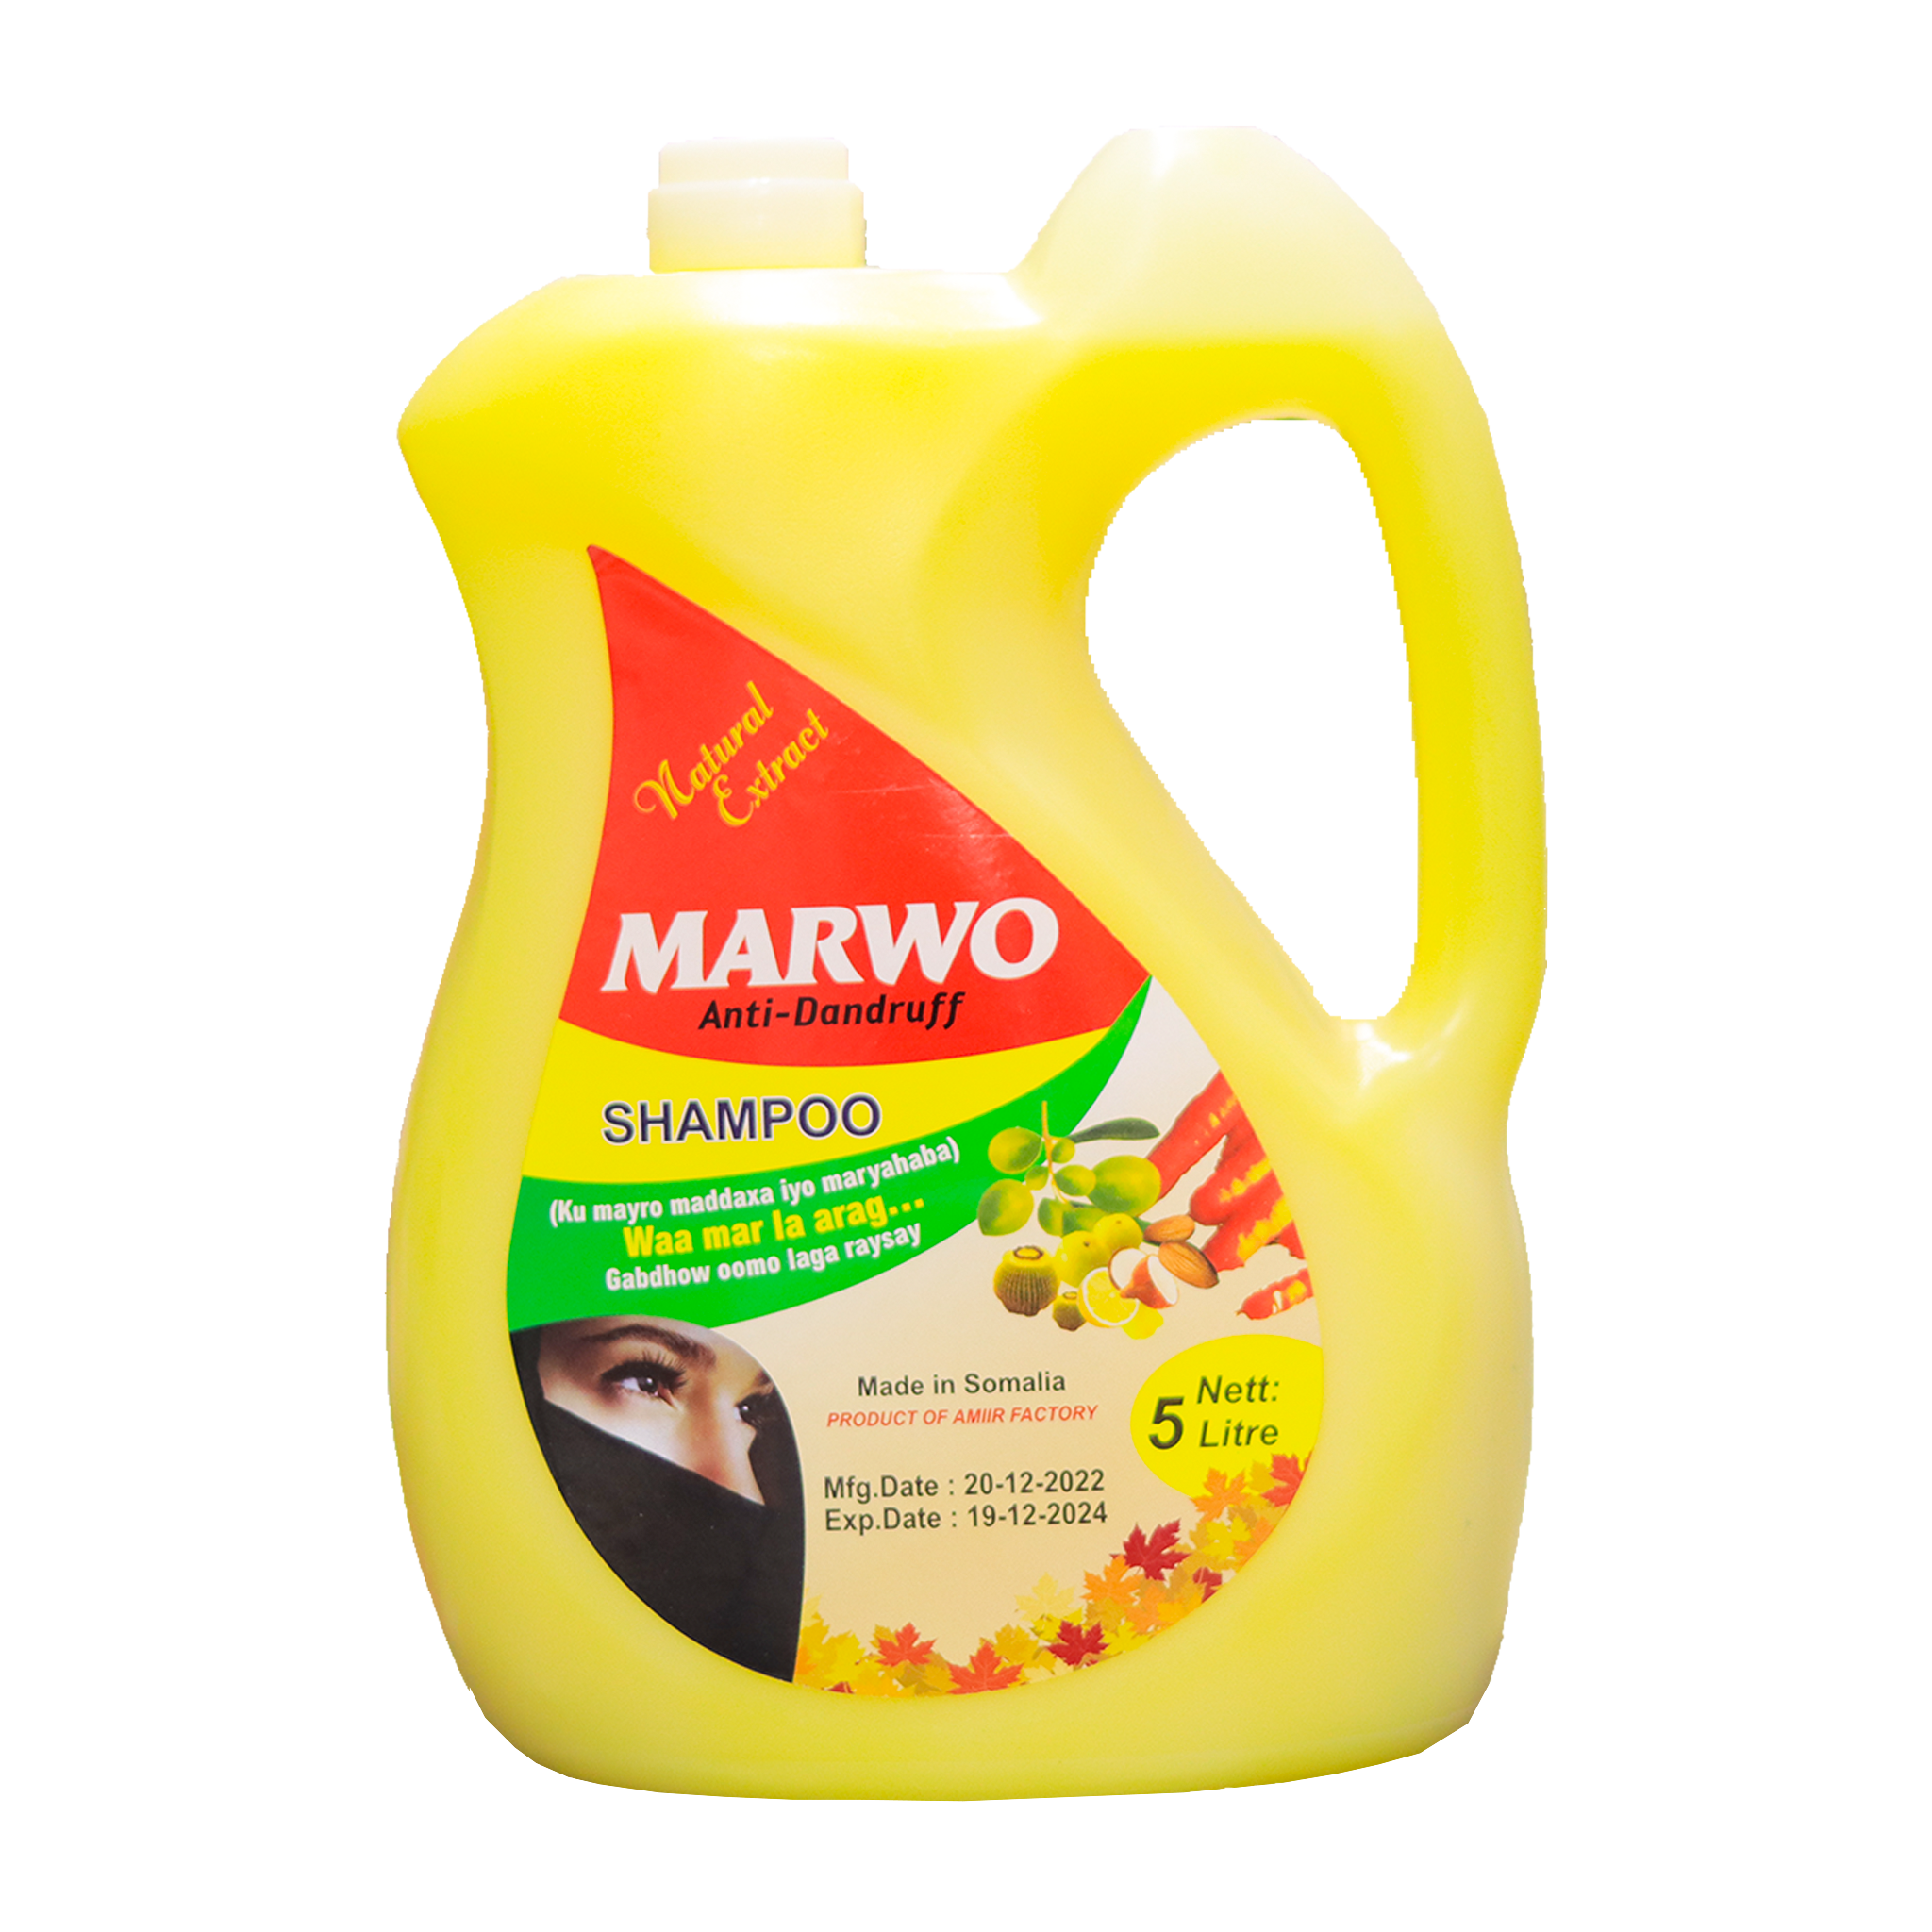 Marwo Shampoo 5L